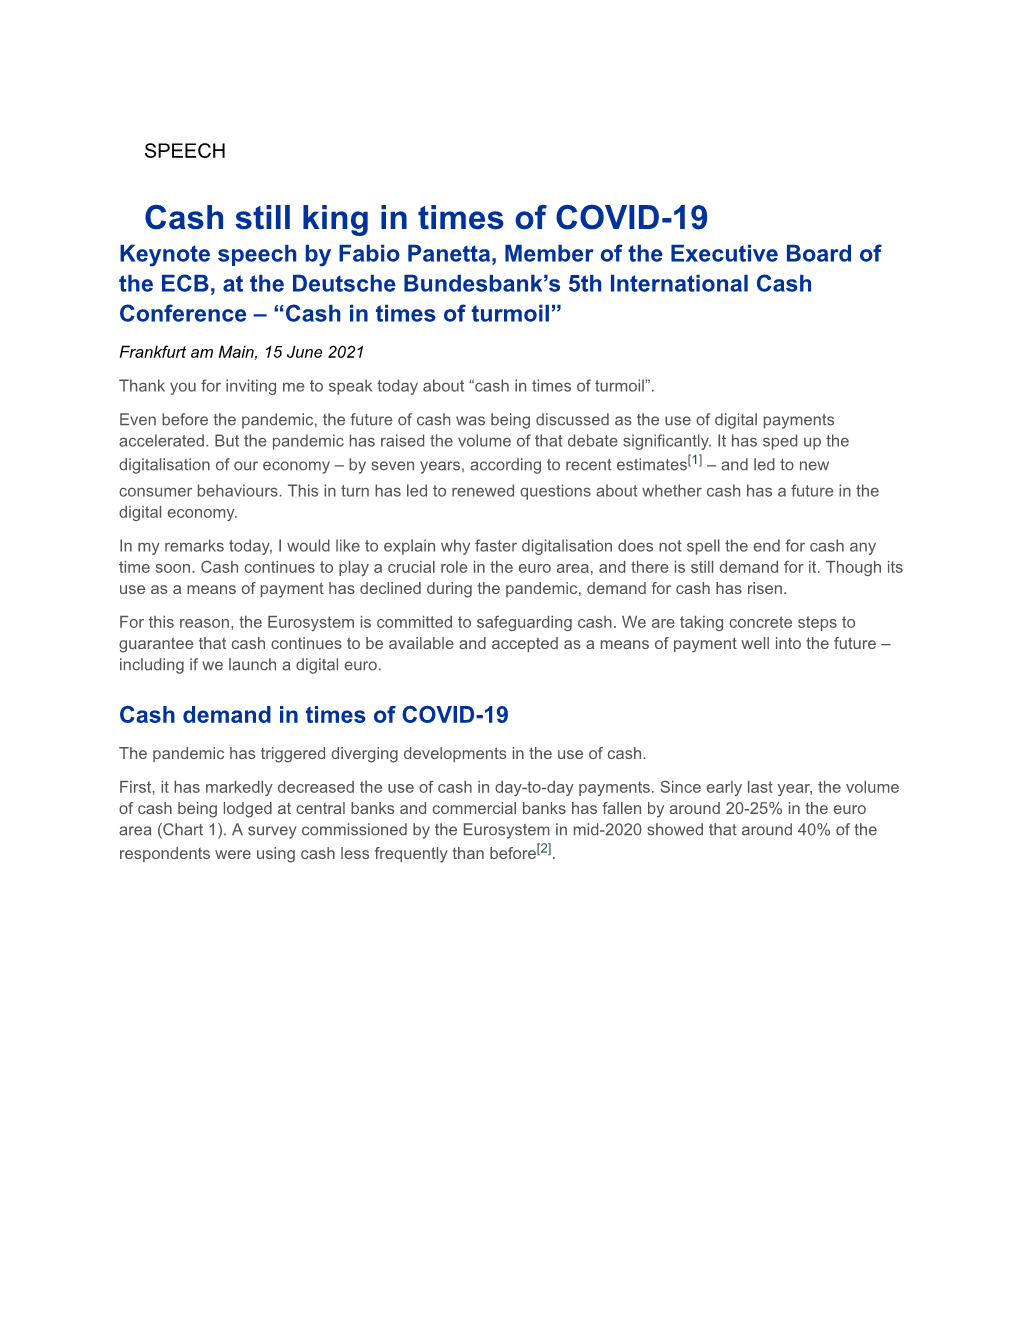 Fabio Panetta: Cash Still King in Times of Covid-19